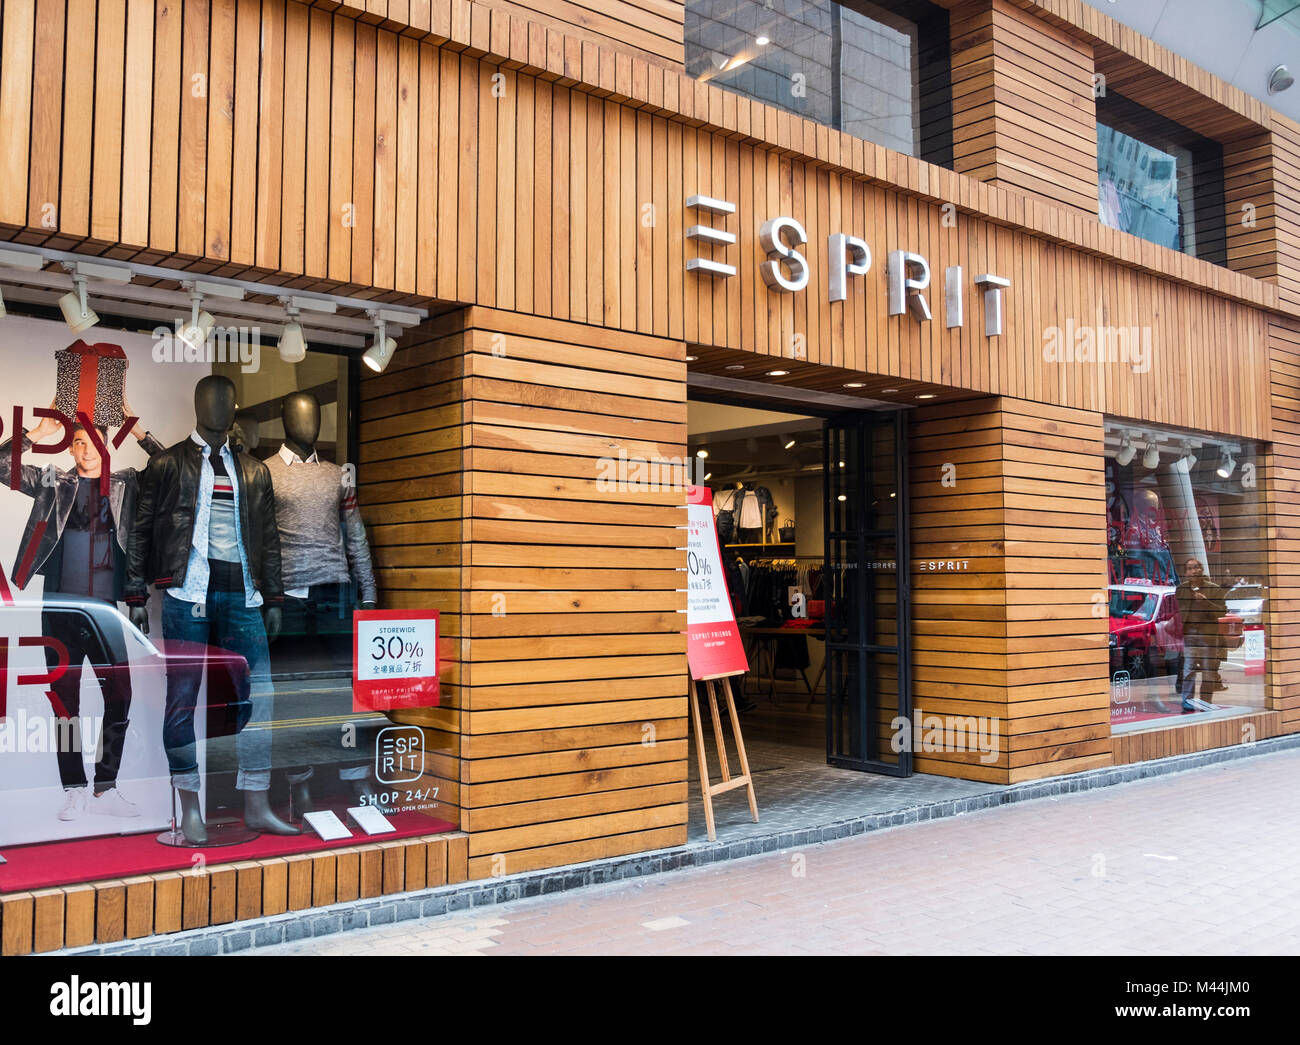 Løft dig op Supermarked Danser Hong Kong - February 11, 2018: Esprit shop in Hong Kong. Esprit is a  manufacturer of clothing, footwear, accessories, jewelery Stock Photo -  Alamy